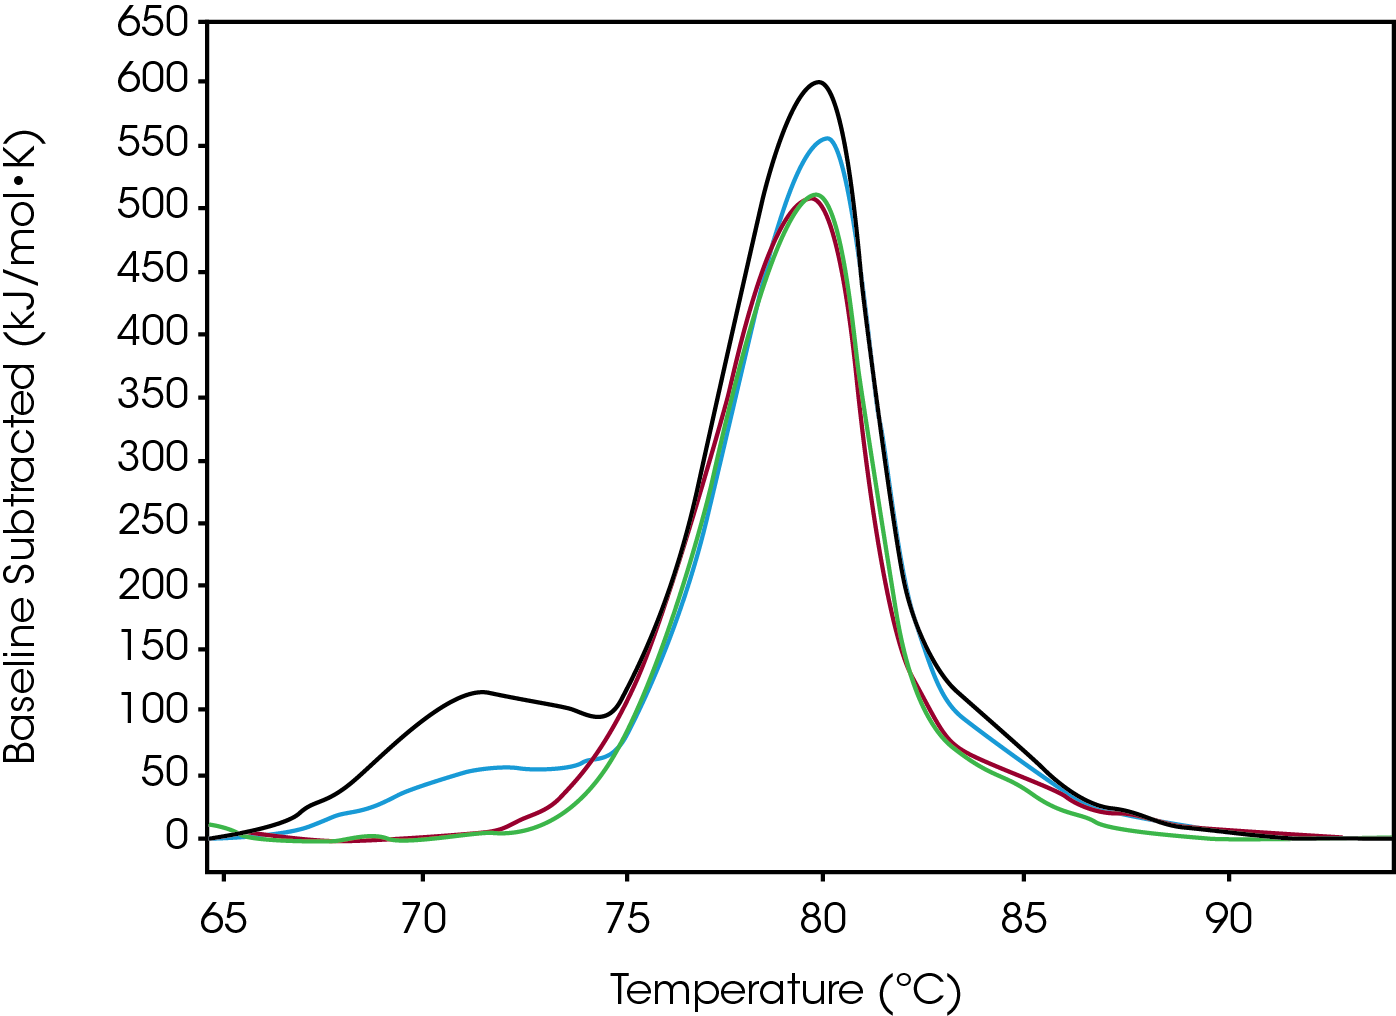 Figure 3. Conjugate Type II data: Native (black), Low (blue), Moderate (green) and High (red).